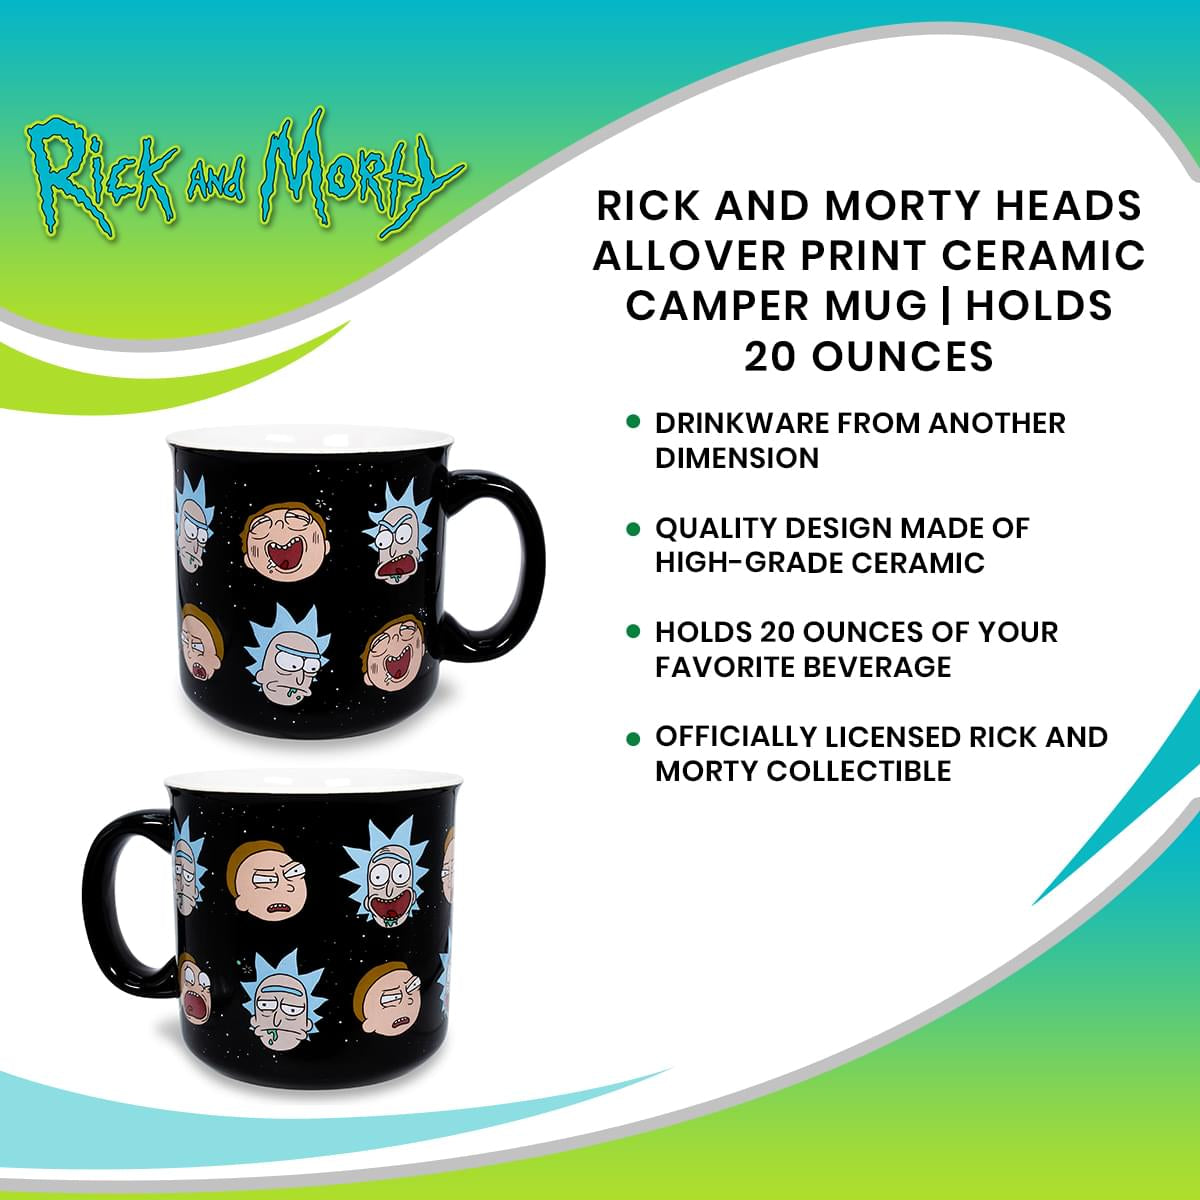 Rick and Morty Heads Allover Print Ceramic Camper Mug | Holds 20 Ounces